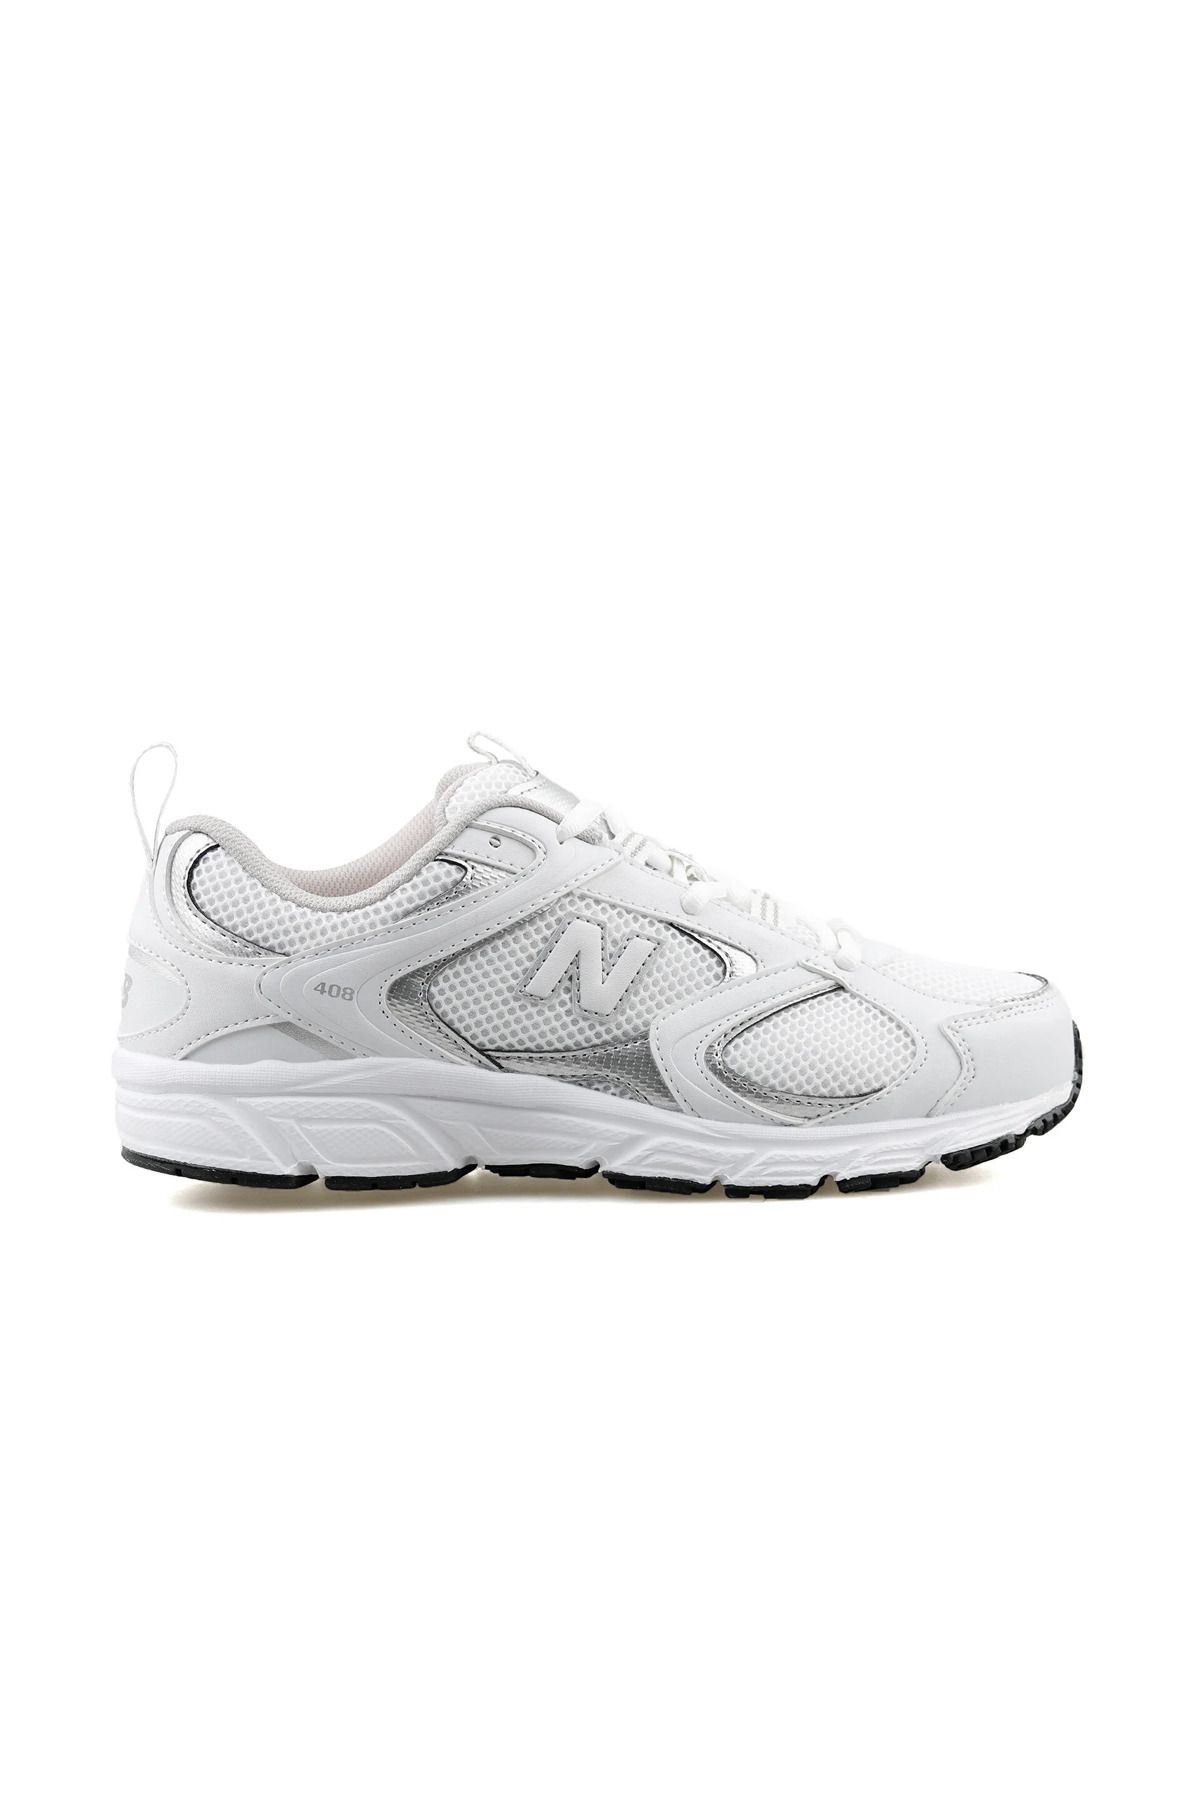 New Balance 408 Unisex White Silver Sneaker Spor Ayakkabı